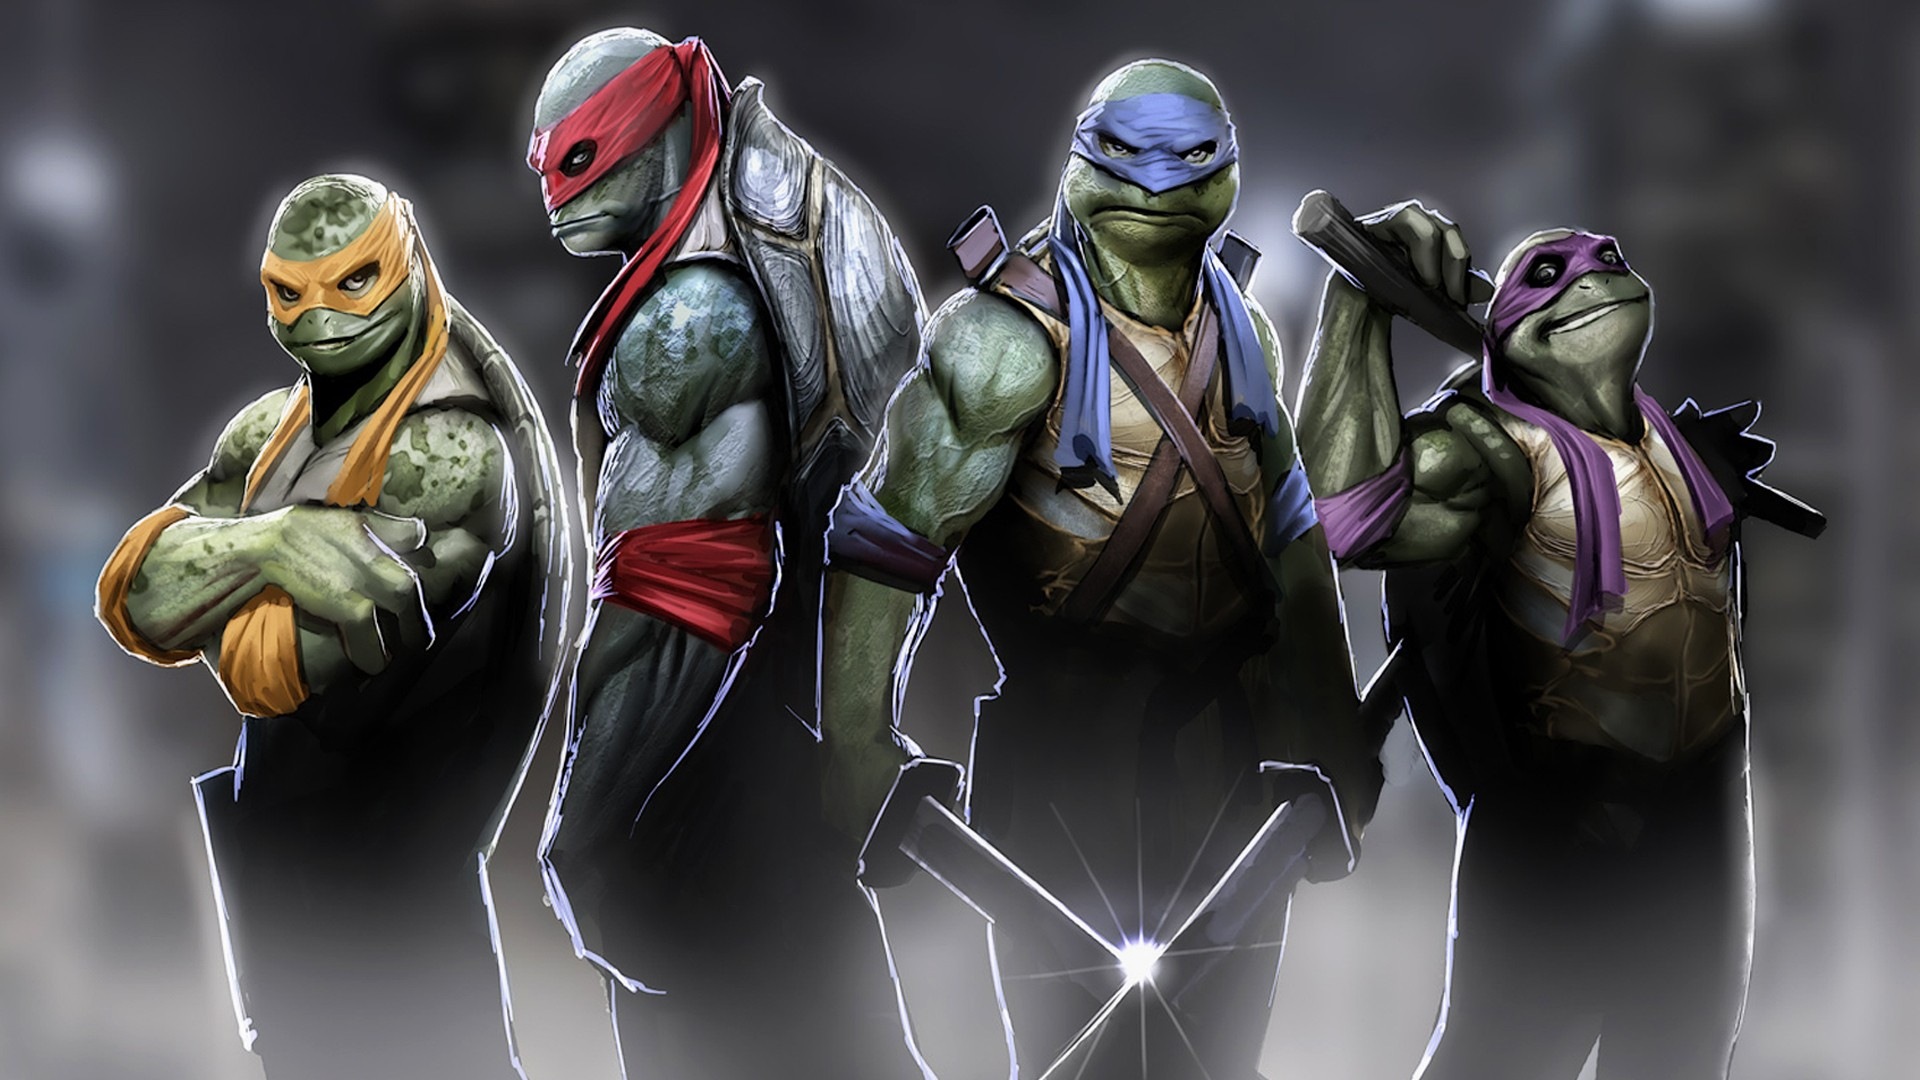 2014 Teenage Mutant Ninja Turtles HD movie wallpapers #12 - 1920x1080